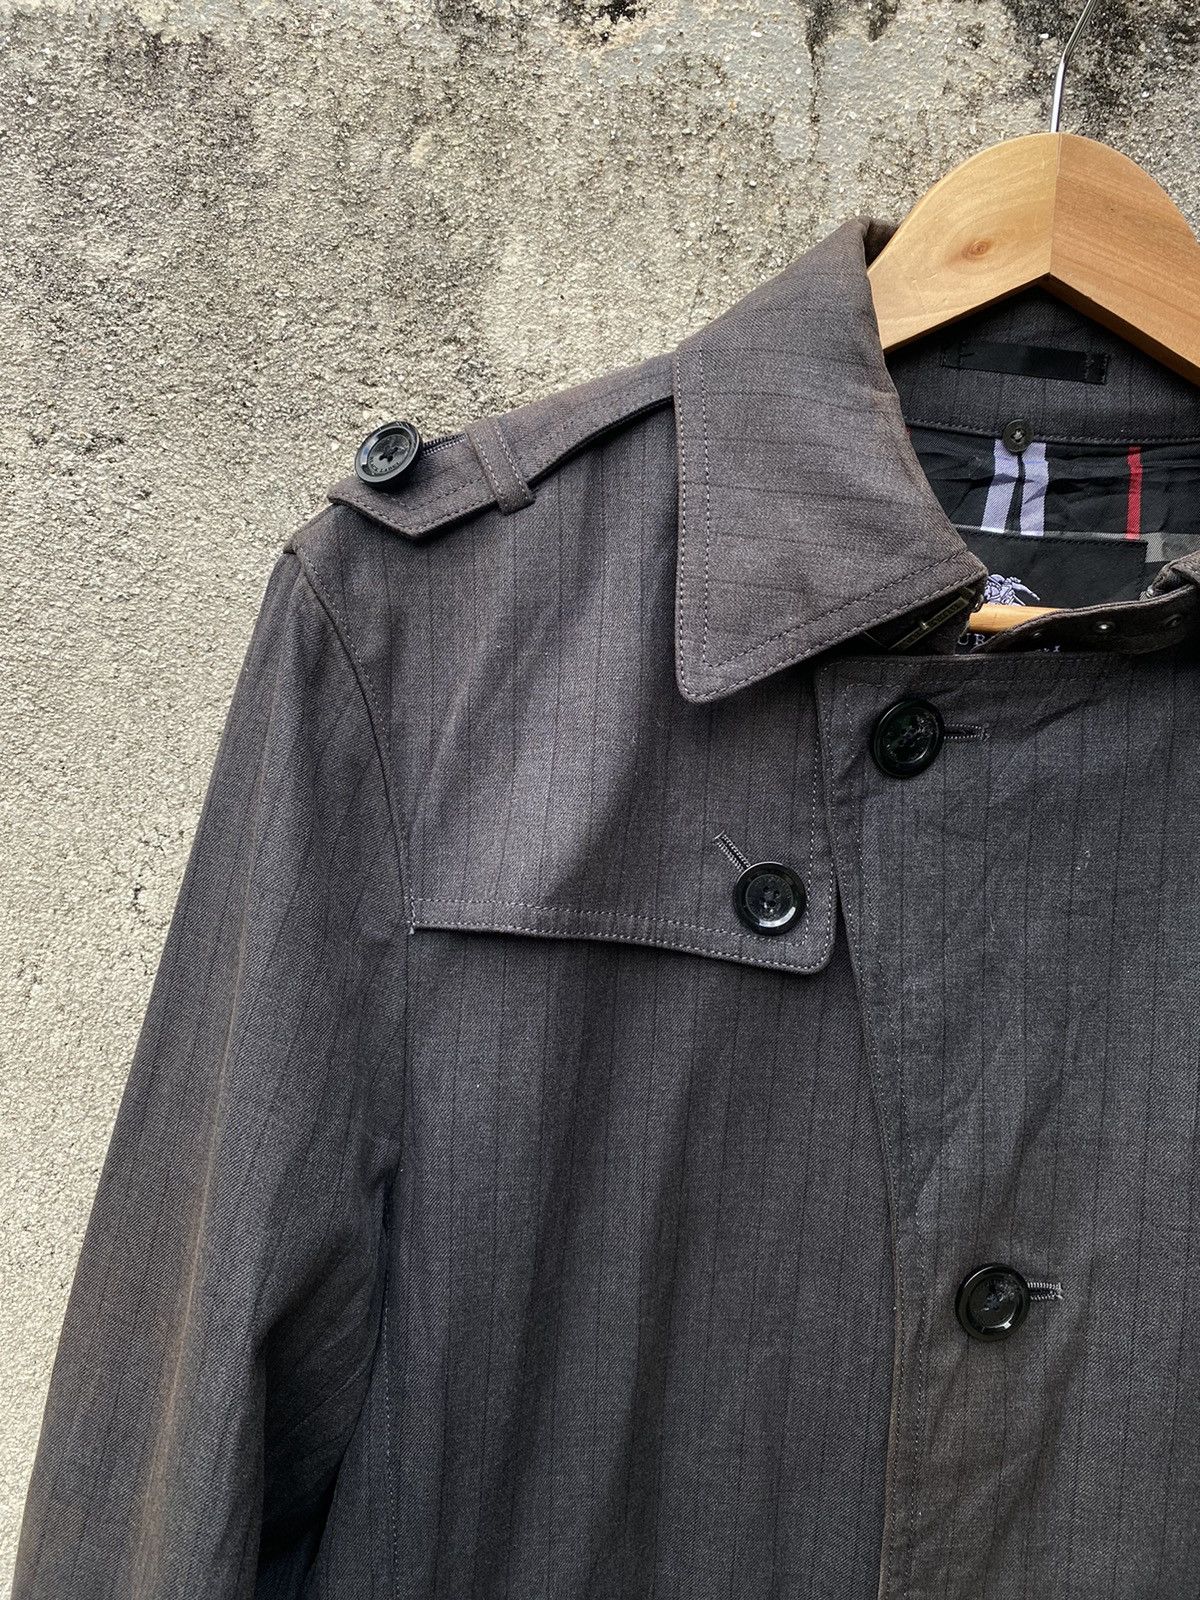 Vintage - Burberry Black Label Trench Coat Single Breasted Jacket - 5